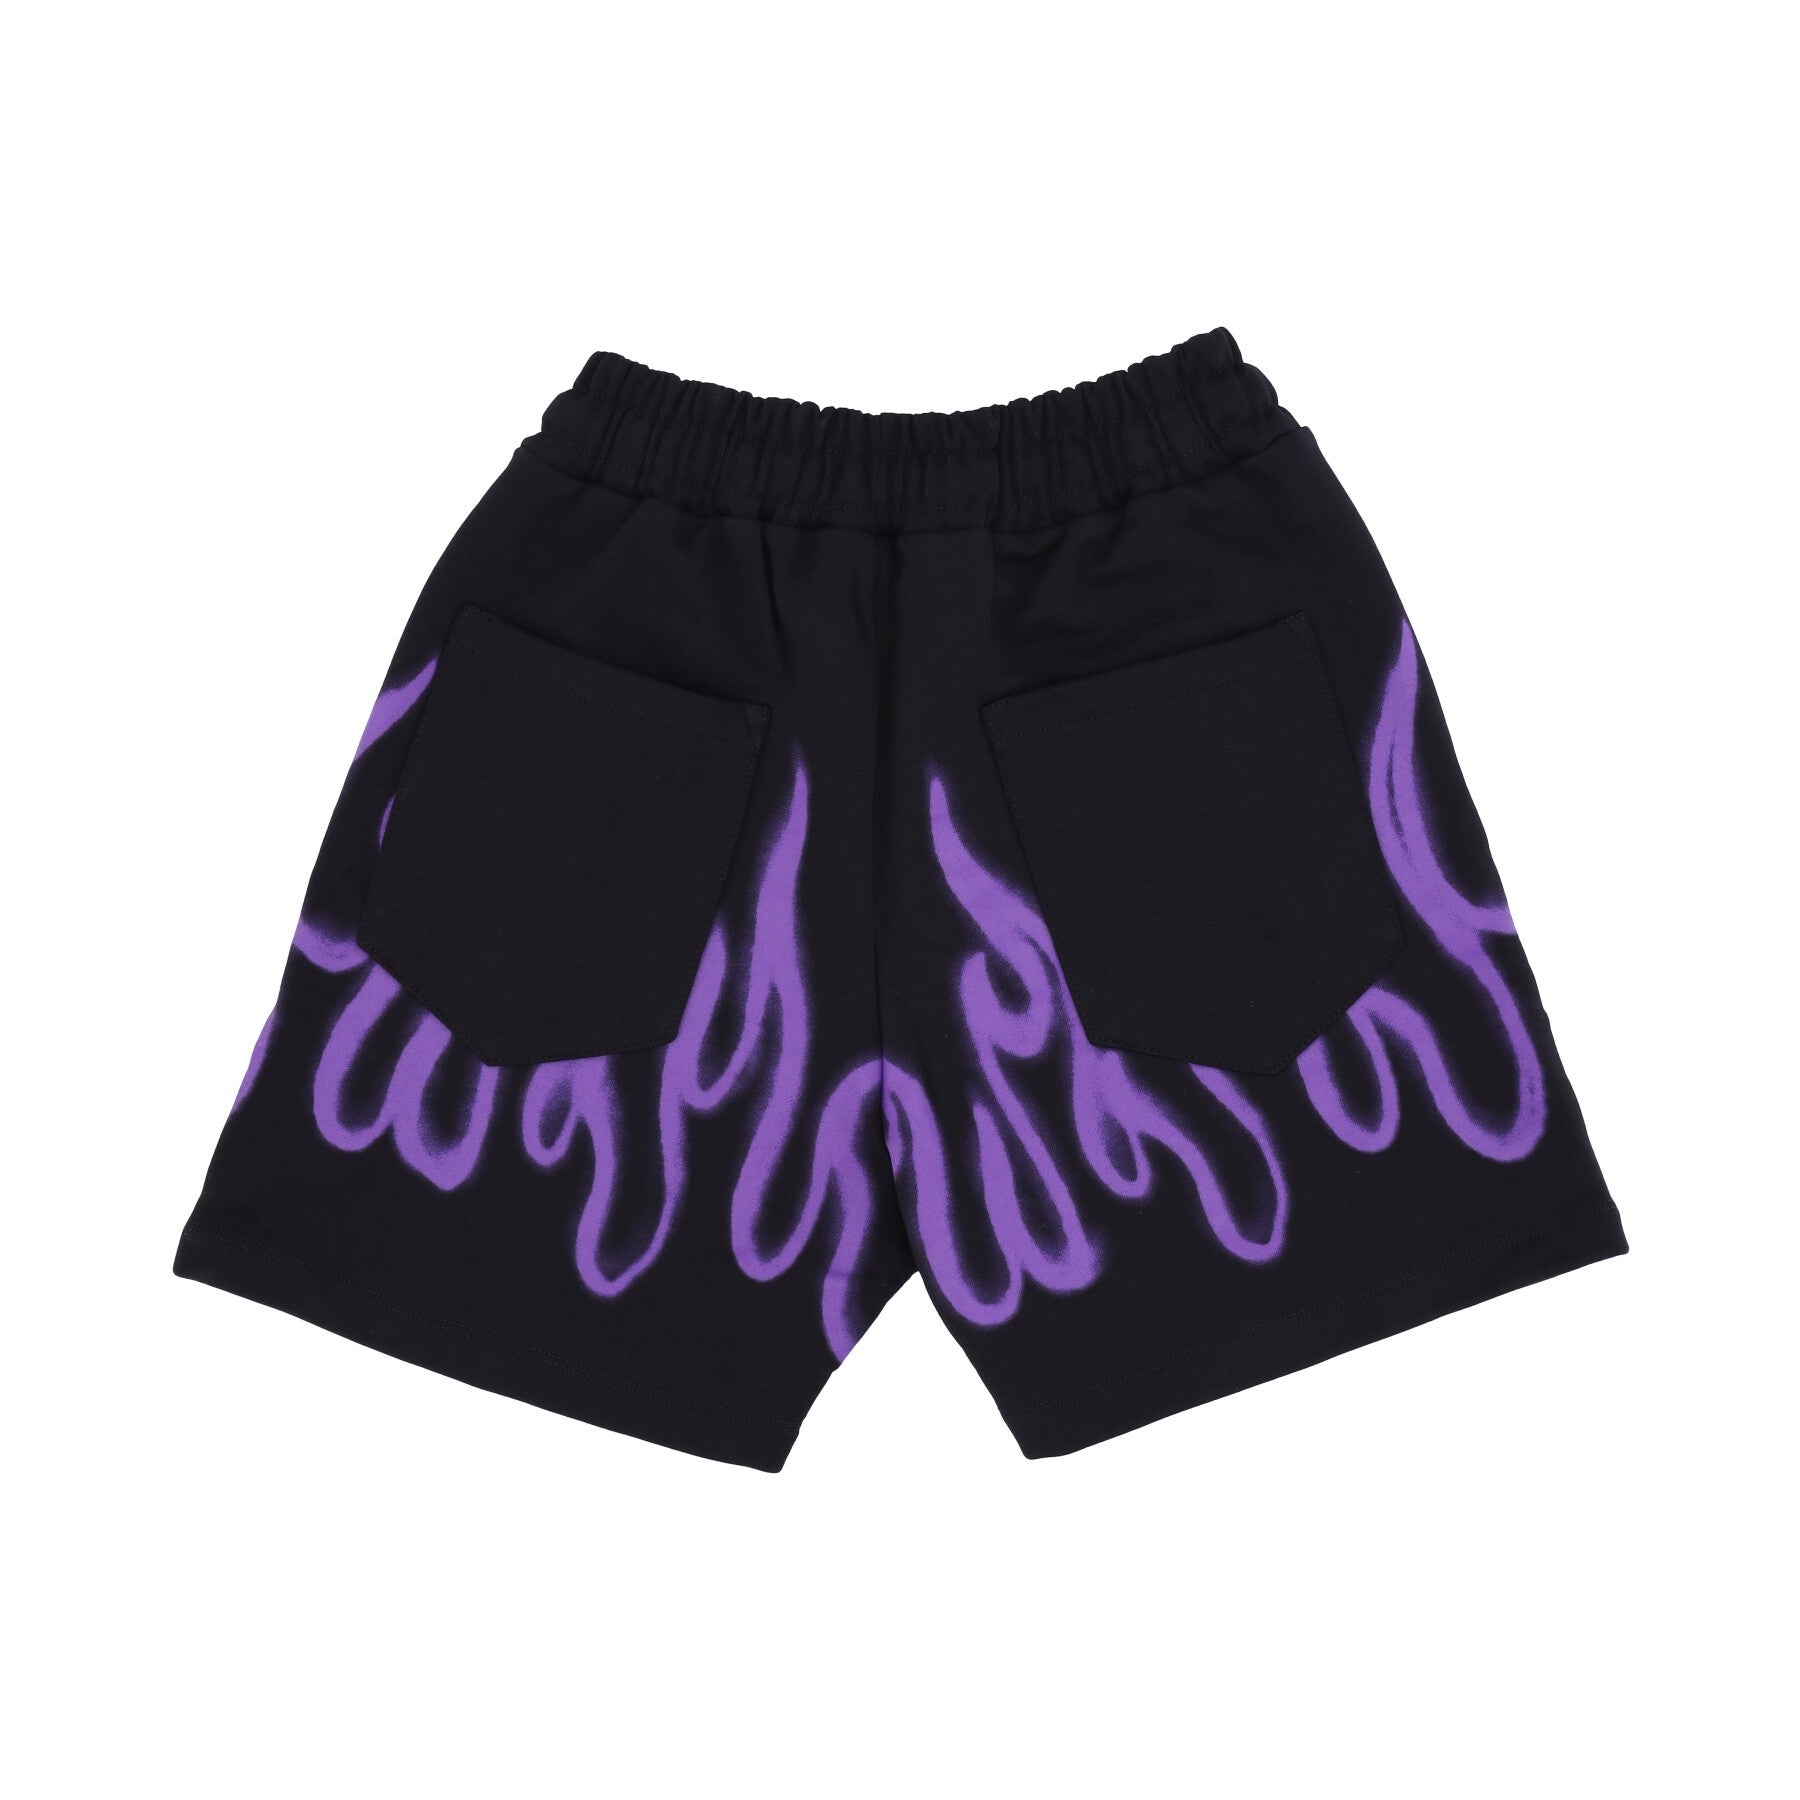 Pantalone Corto Tuta Uomo Spray Flames Shorts Black/purple